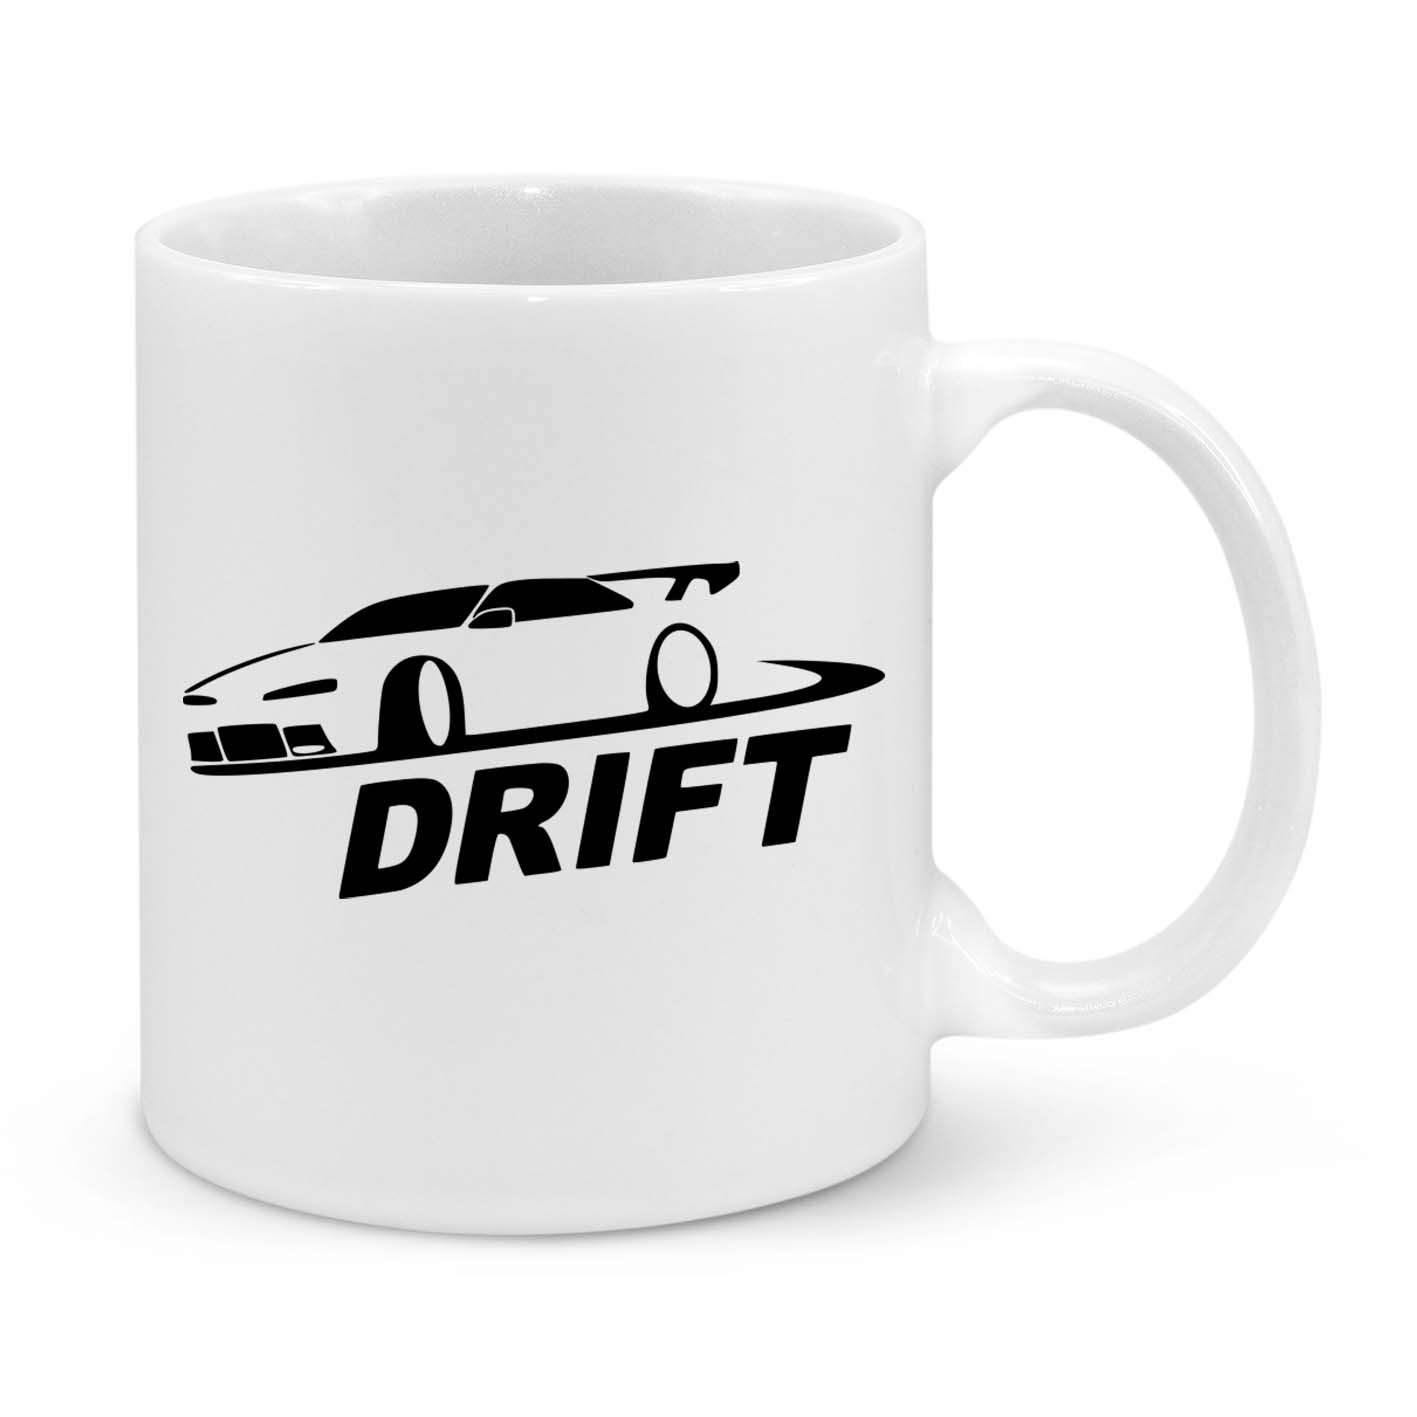 Drift Novelty Mug